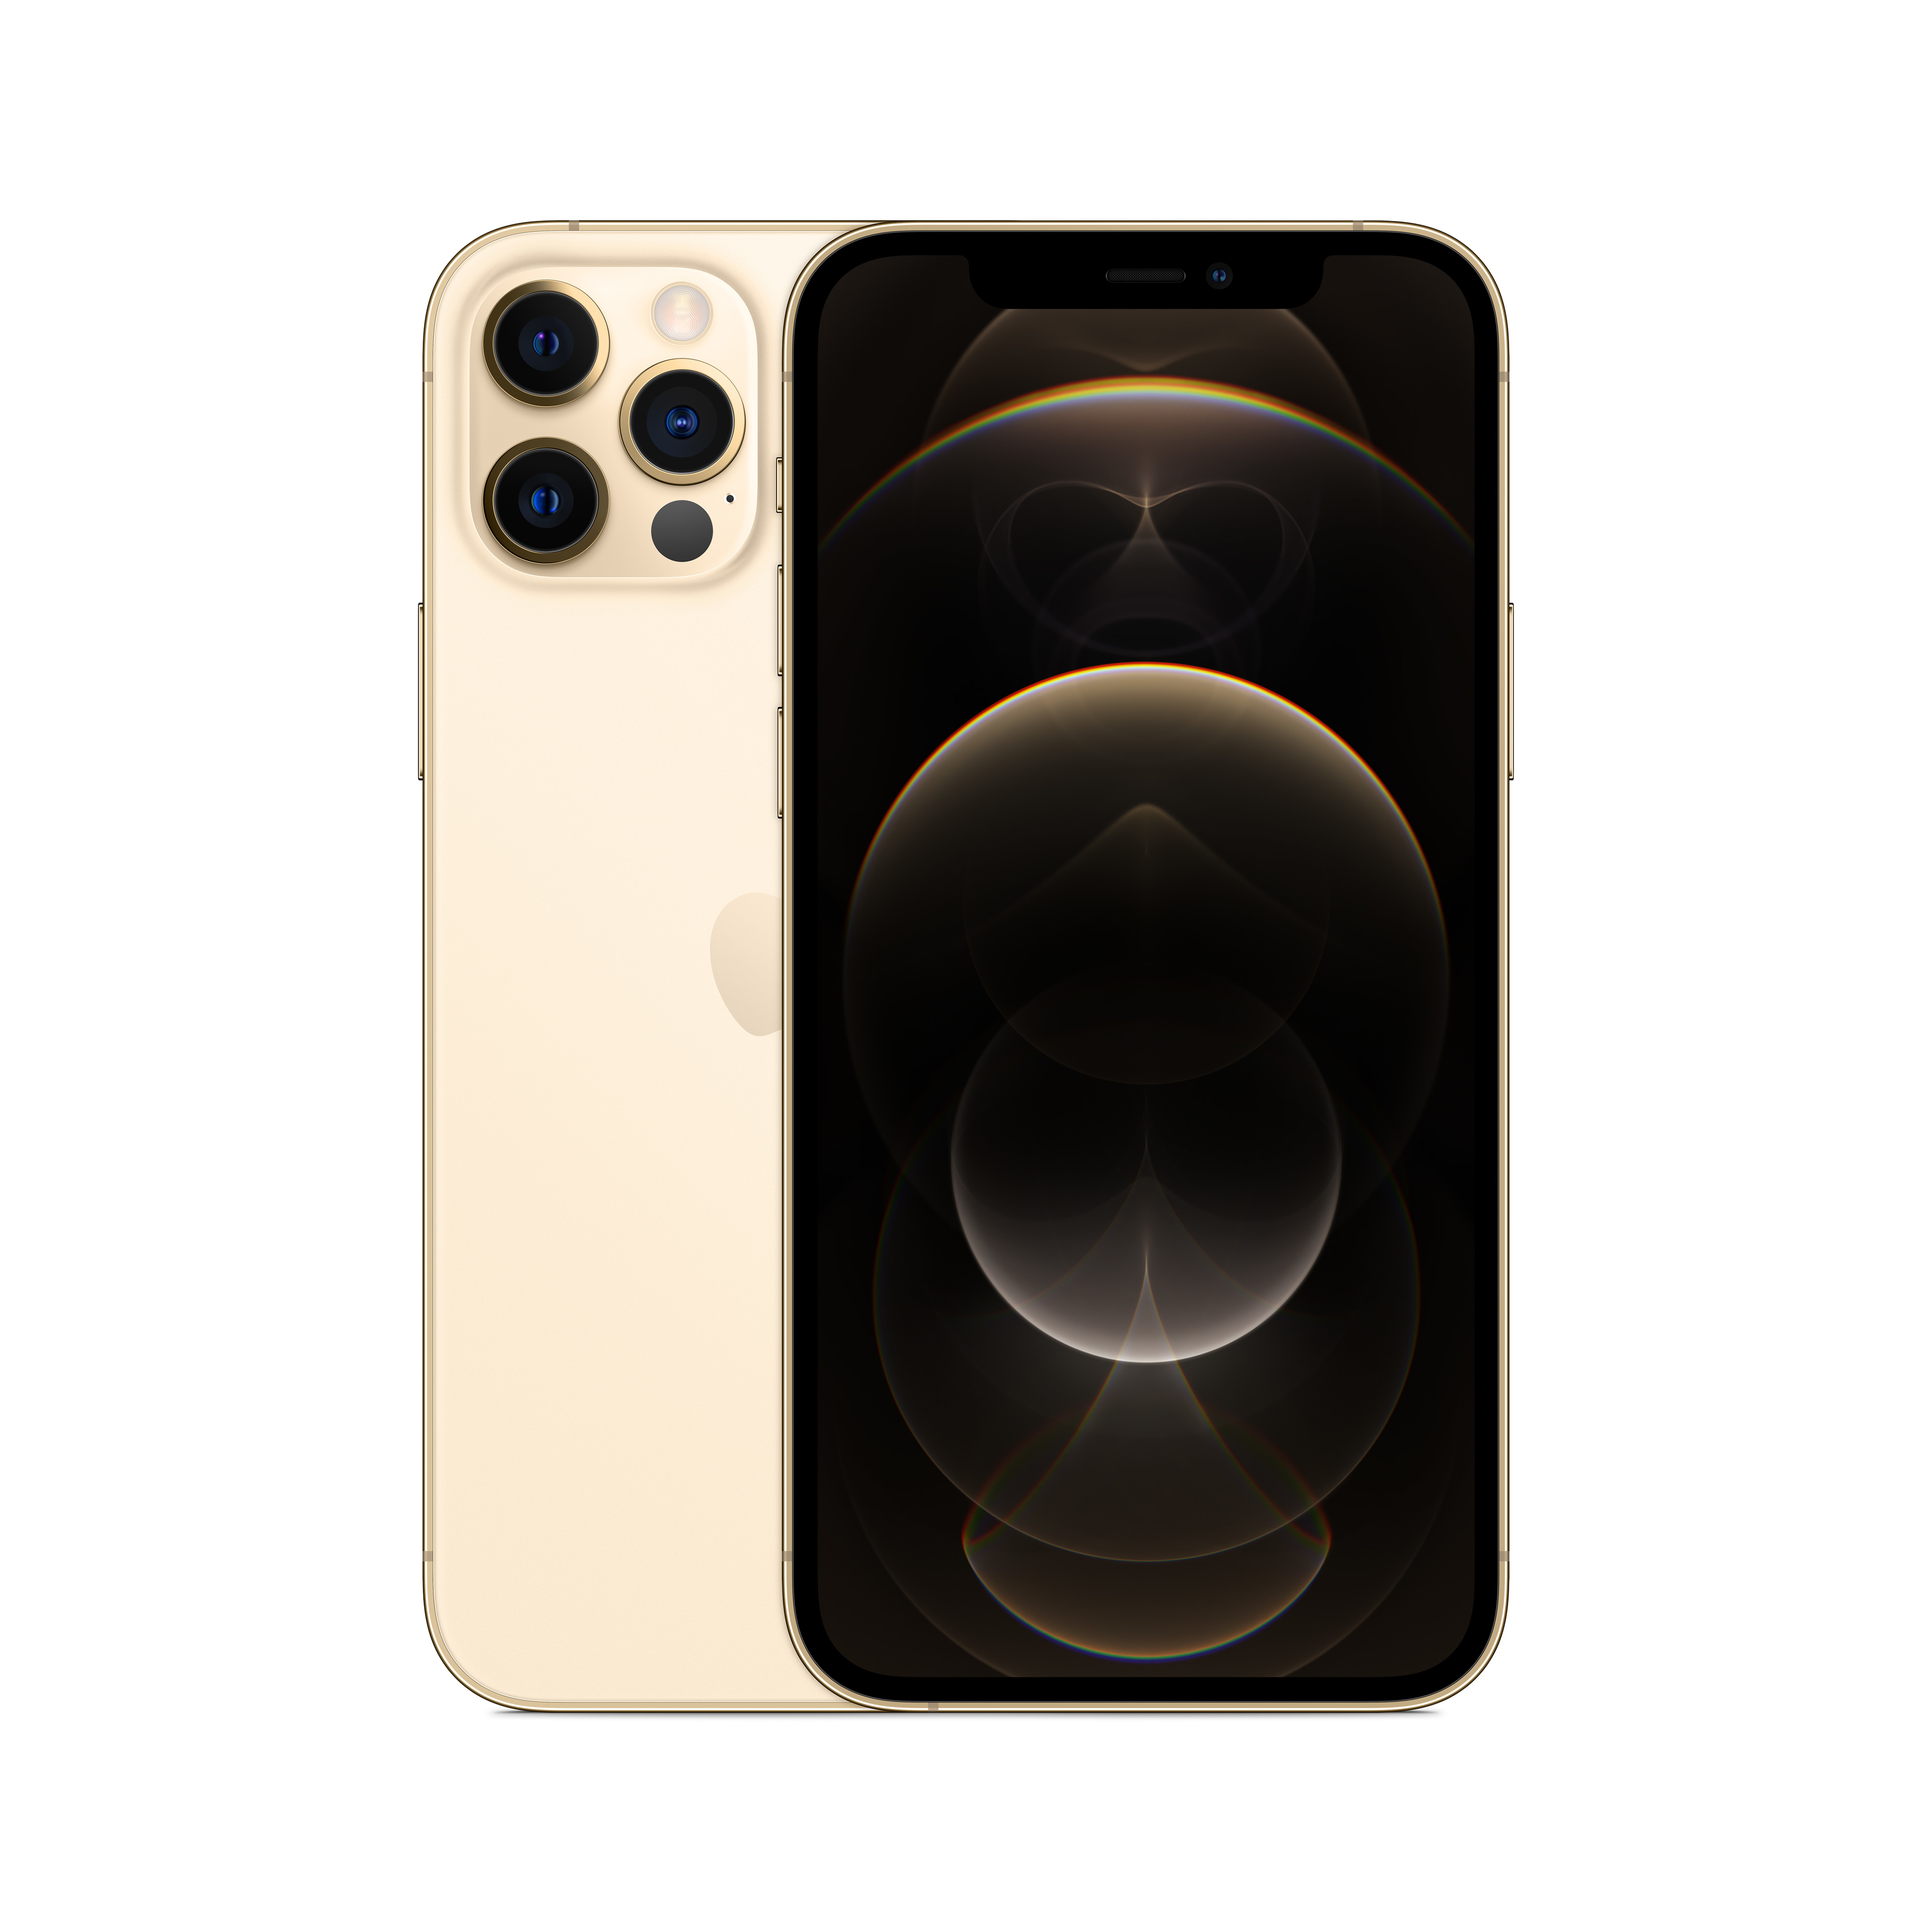 APPLE REFURBISHED (*) iPhone 12 Pro 256 Gold GB Dual SIM